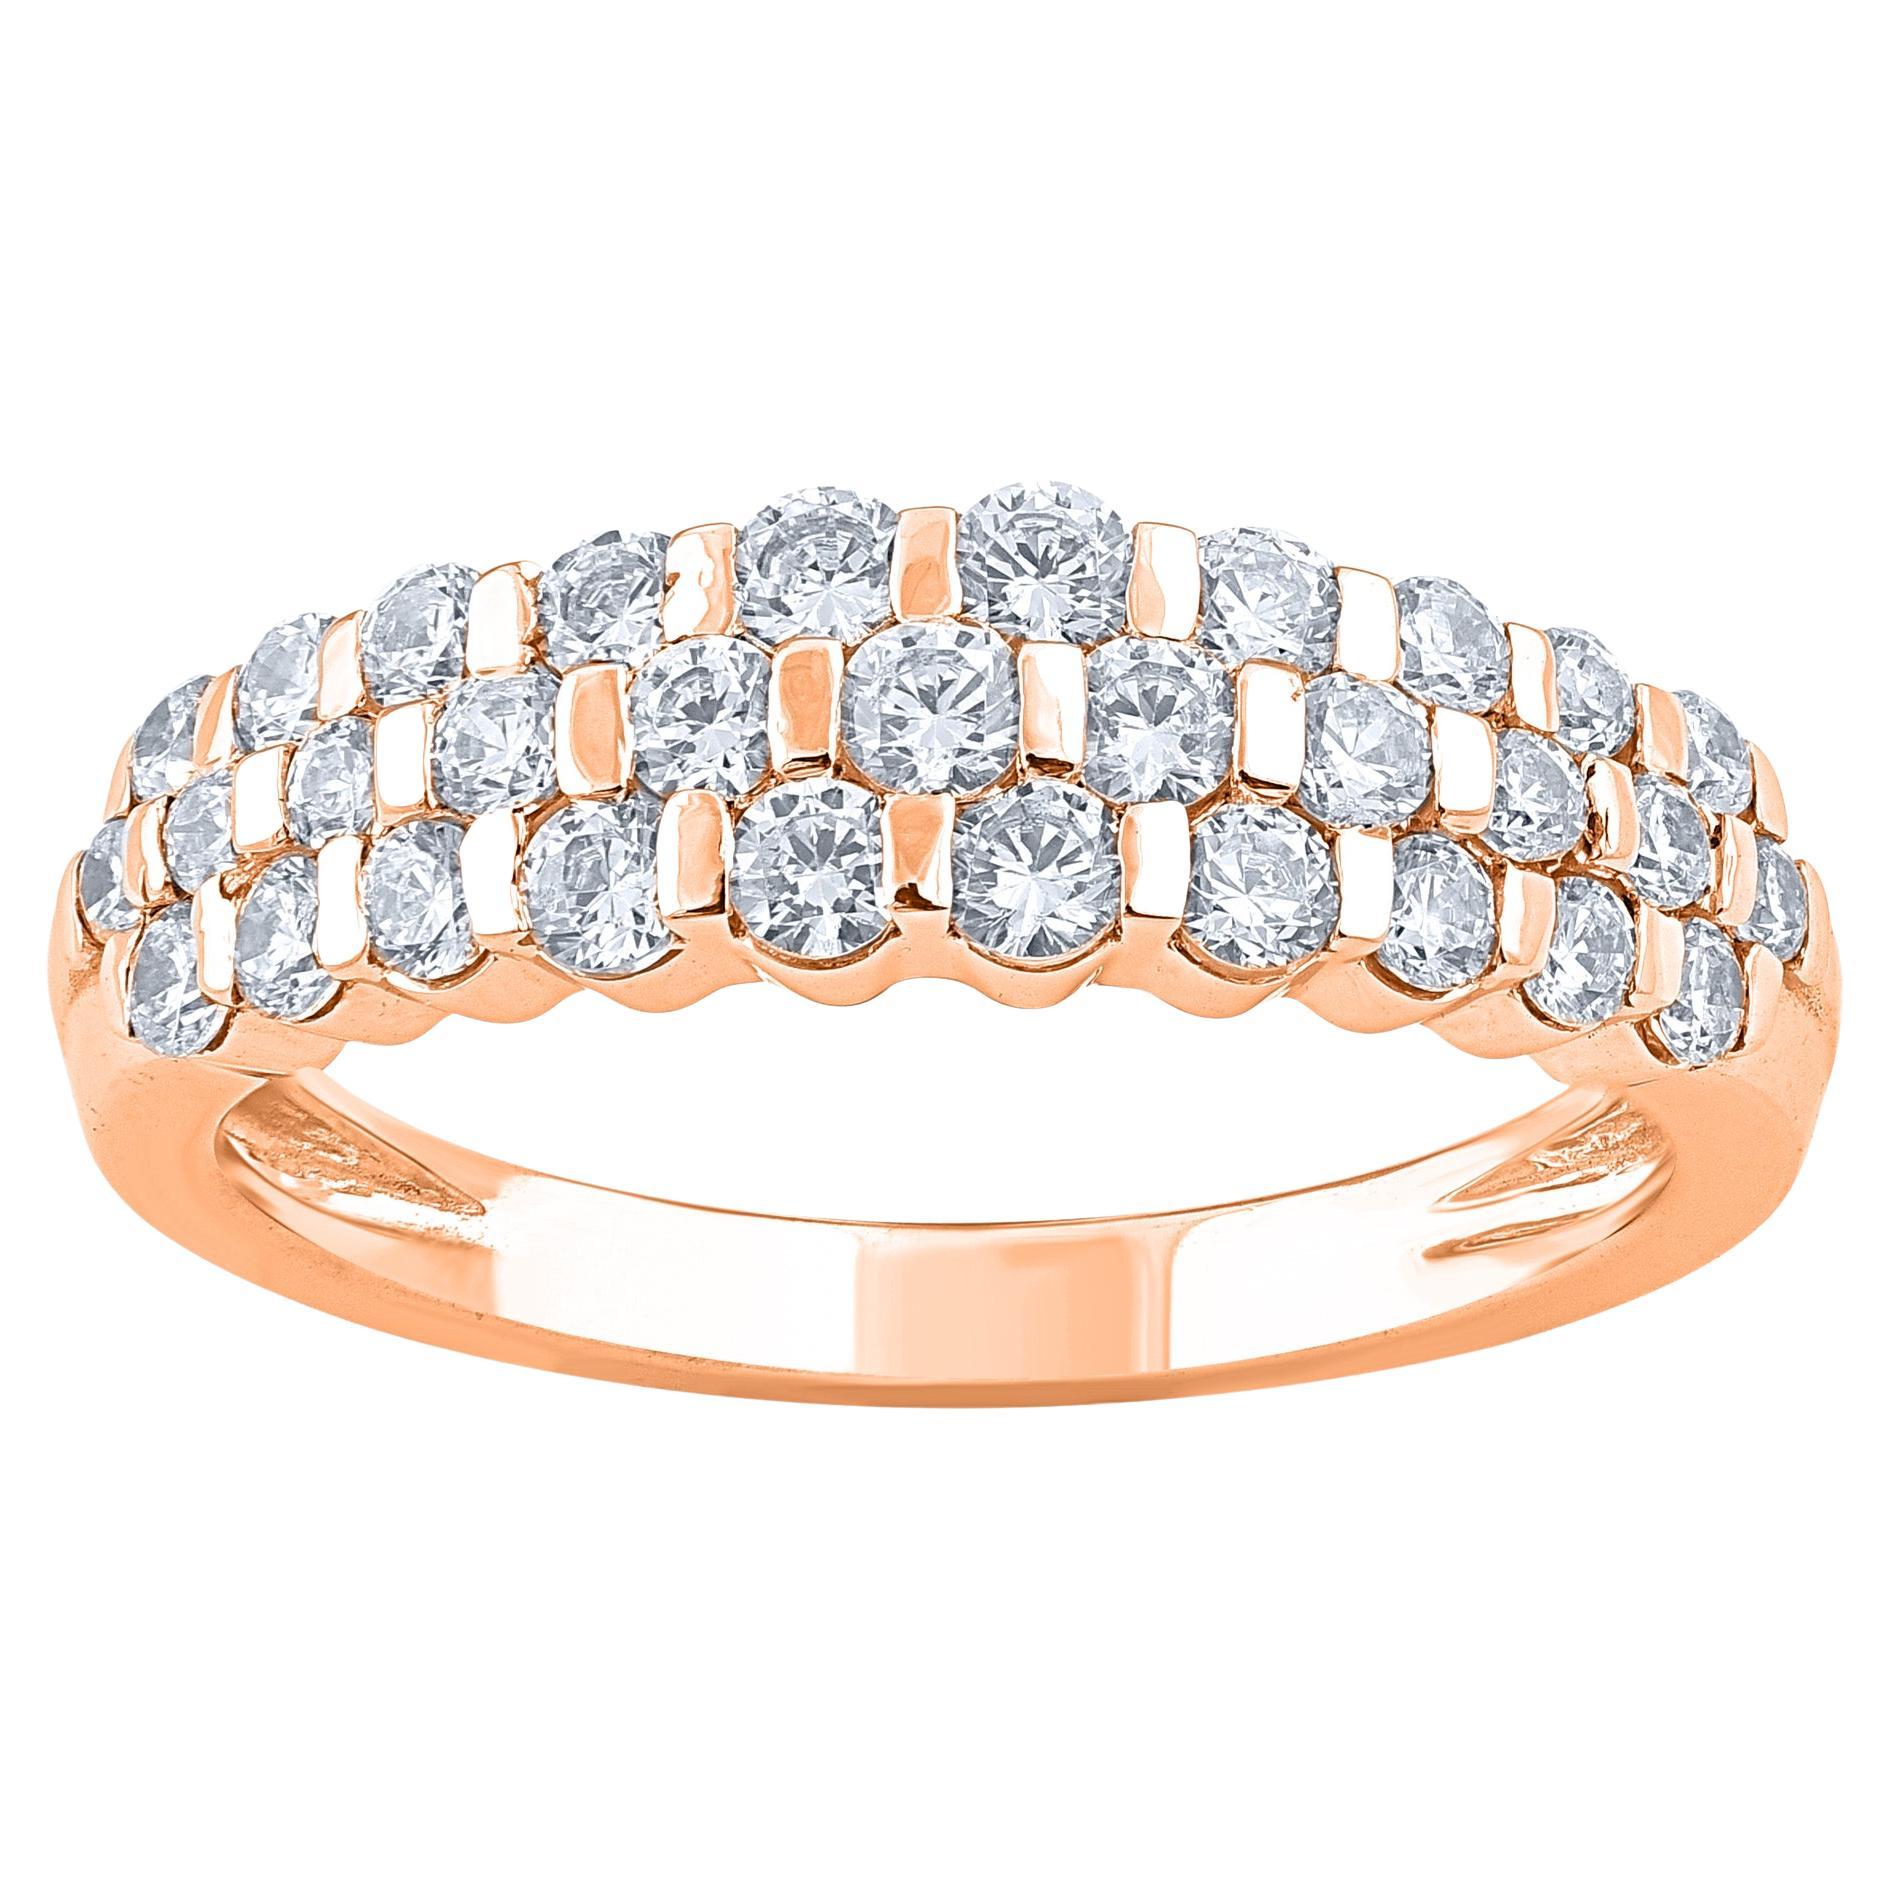 TJD 1.0 Carat Brilliant Cut Diamond 14KT Rose Gold Three Row Wedding Band Ring